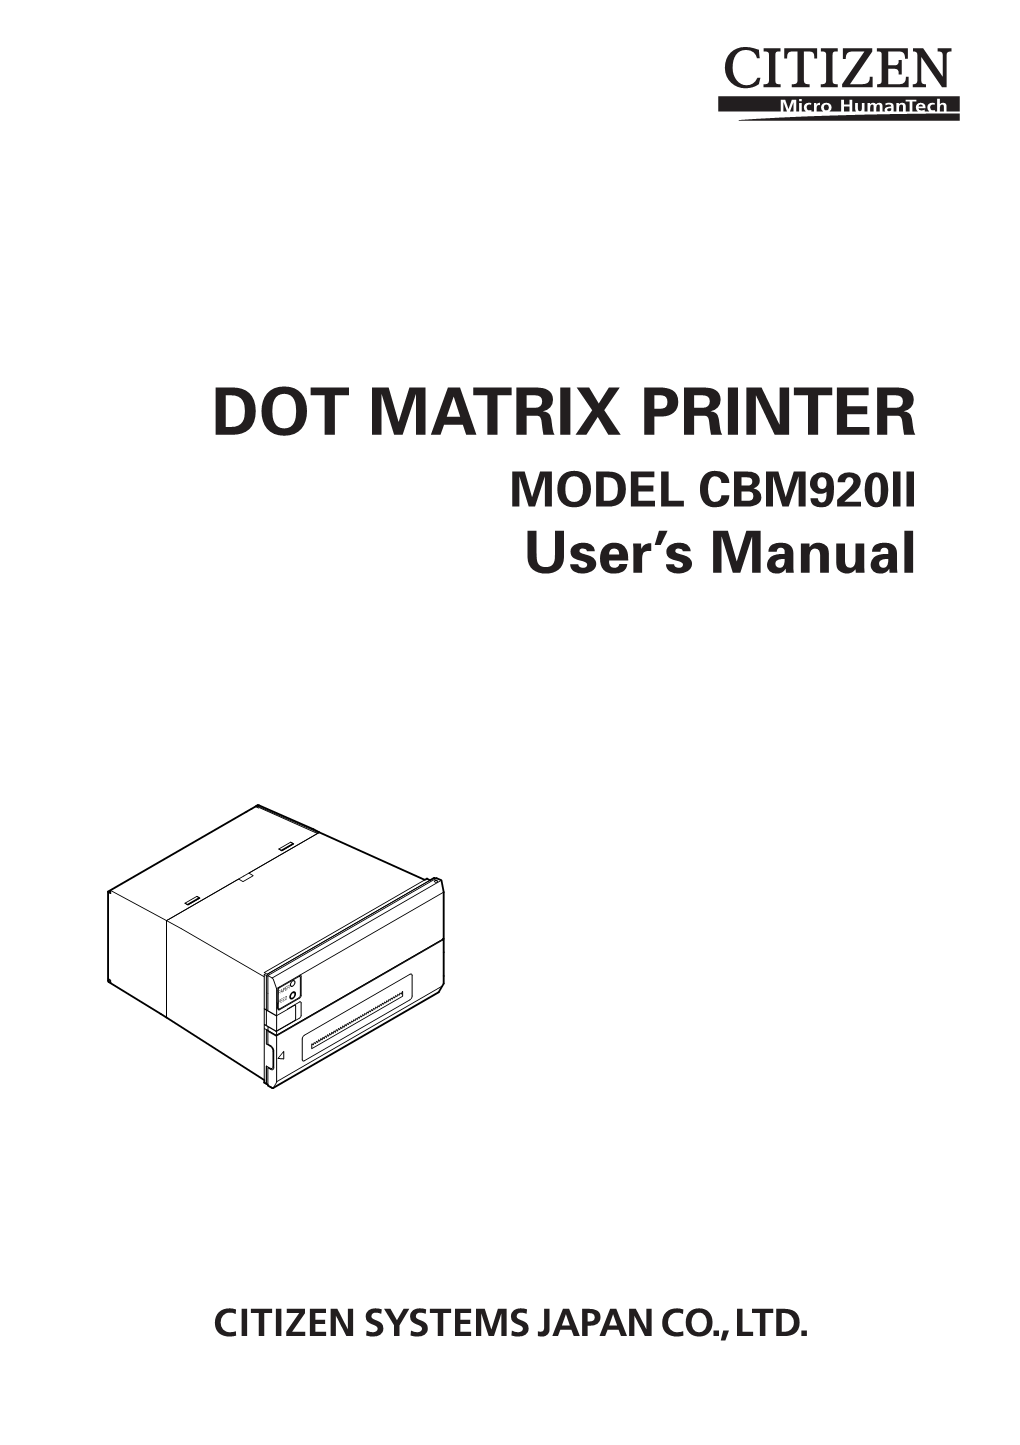 DOT MATRIX PRINTER MODEL CBM920II User’S Manual